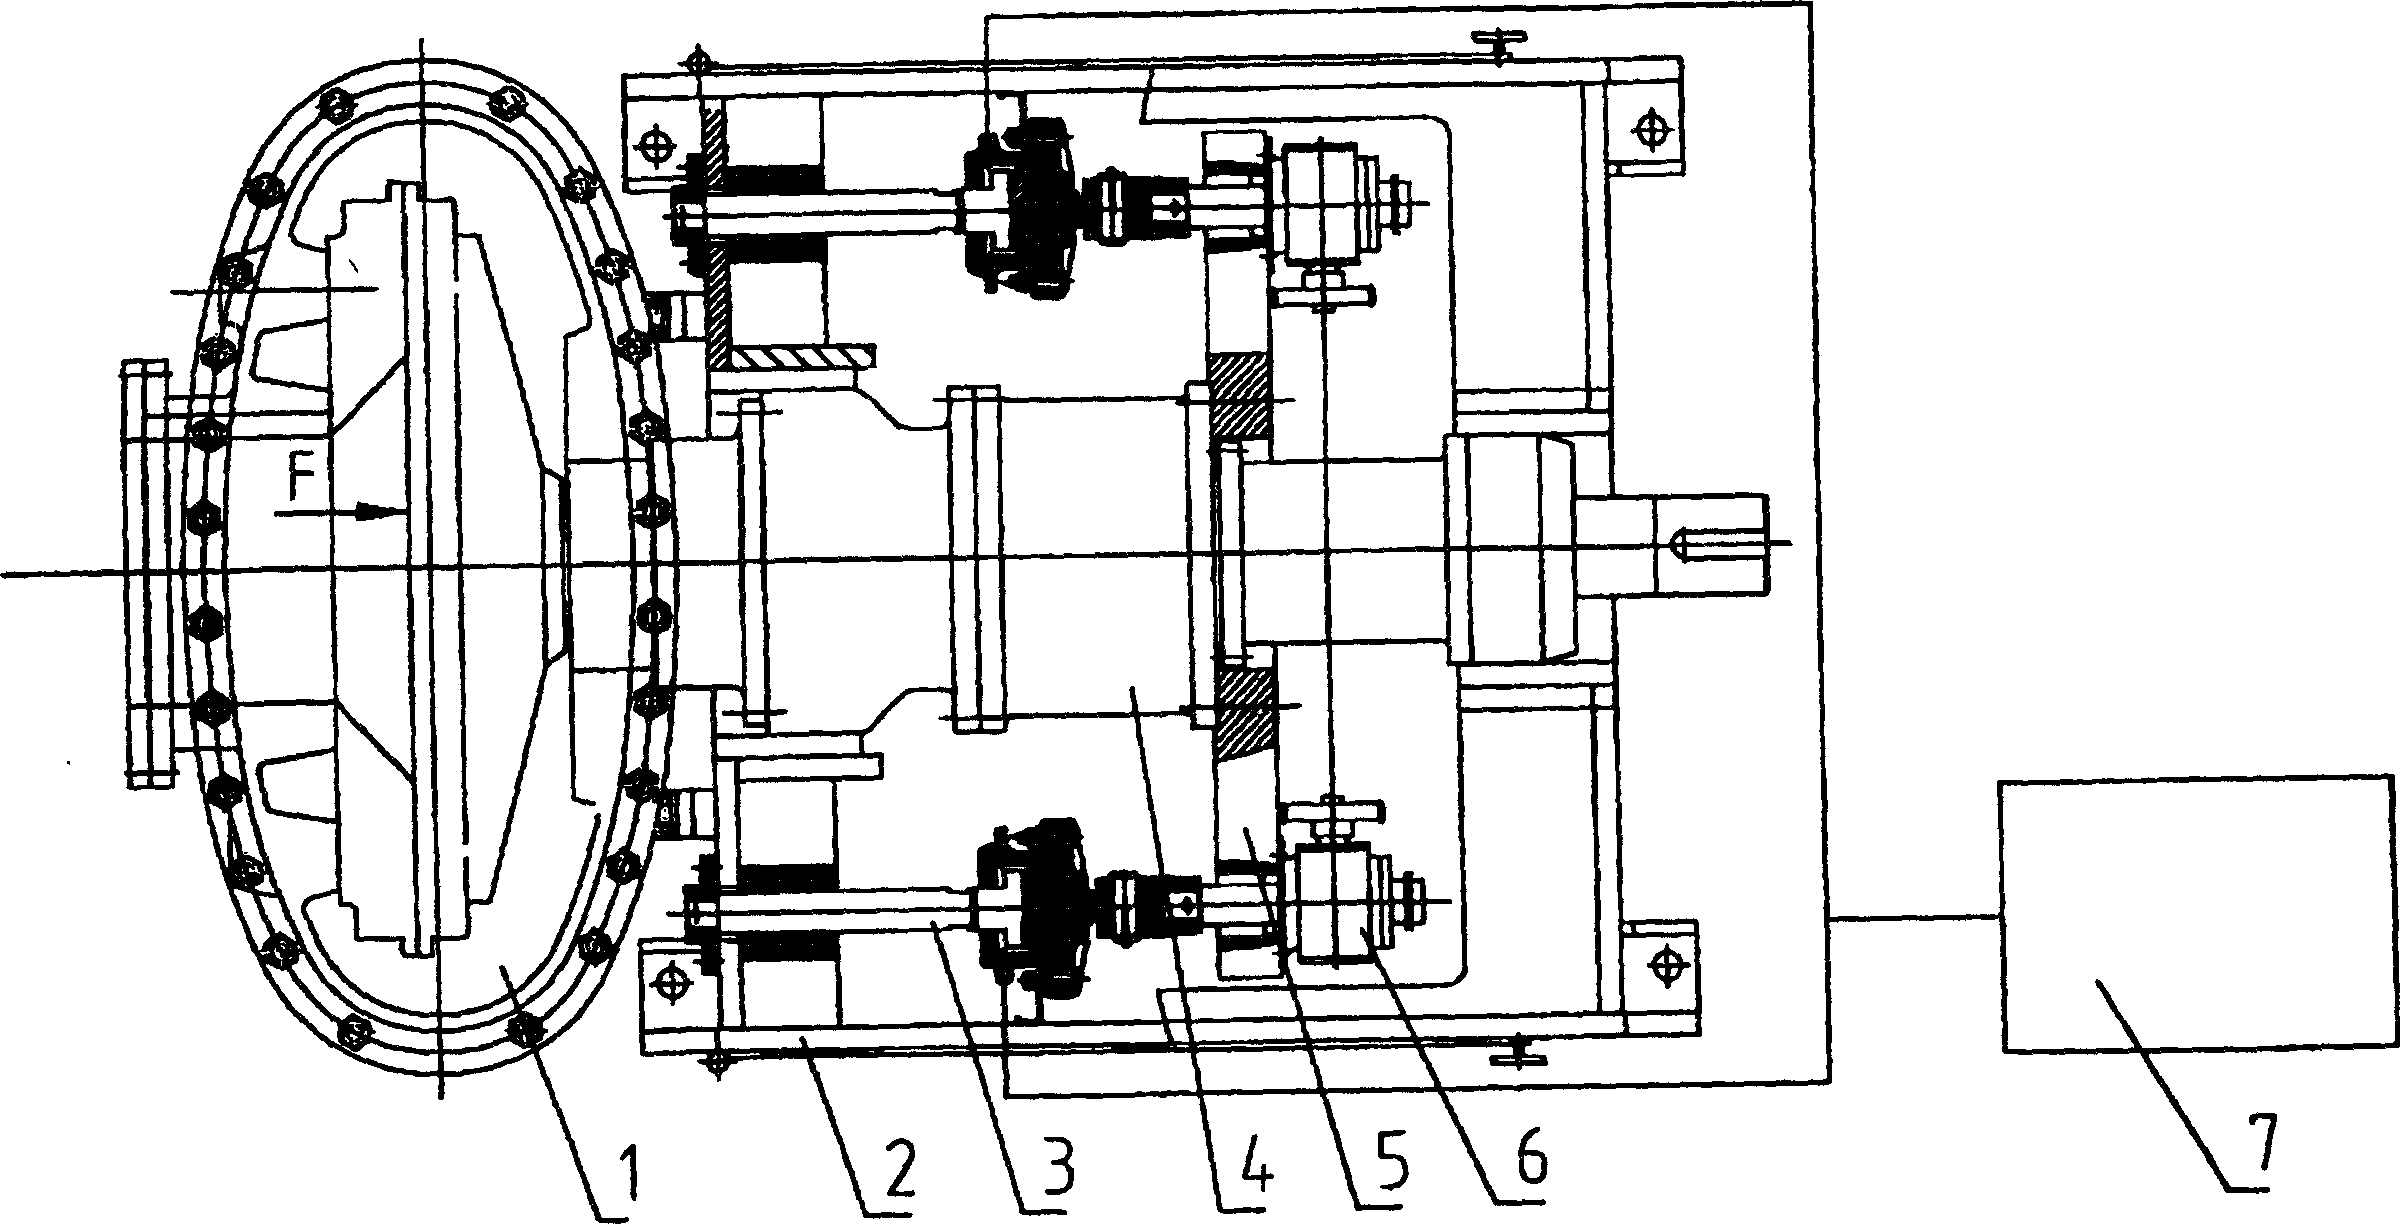 Hydraulic tension apparatus